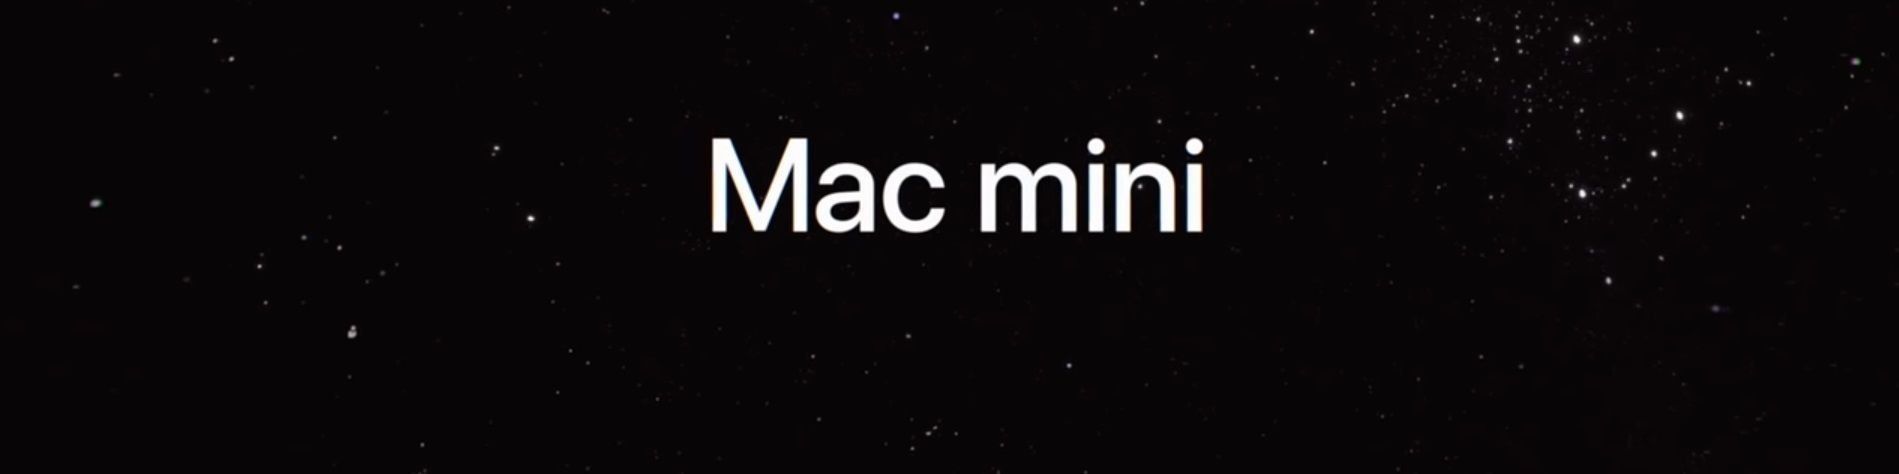 Apple Mac mini 2018 - 優點和缺點